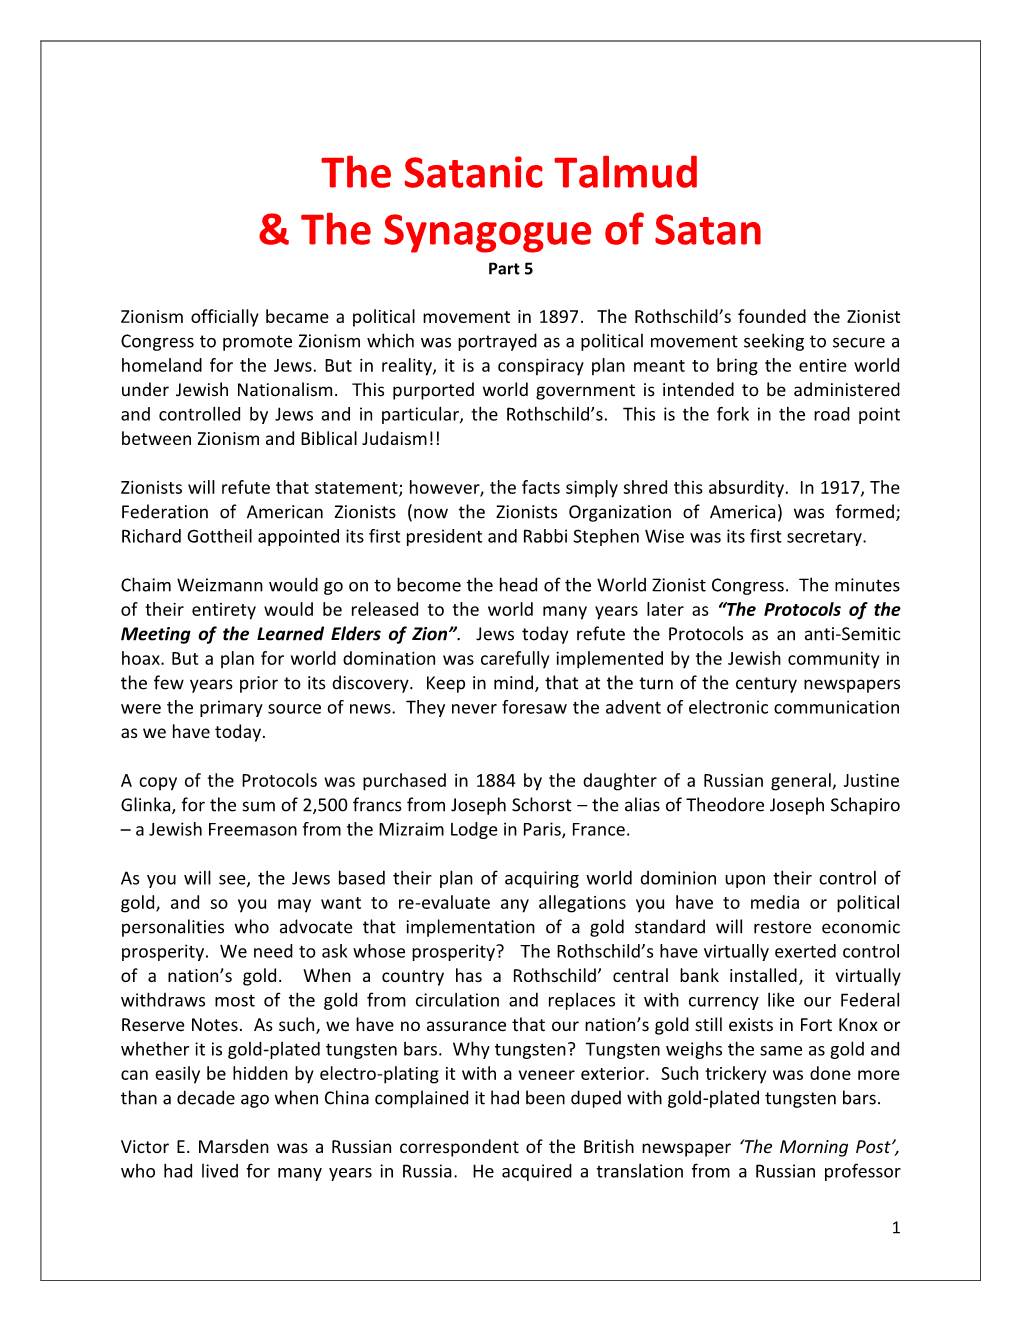 The Satanic Talmud & the Synagogue of Satan